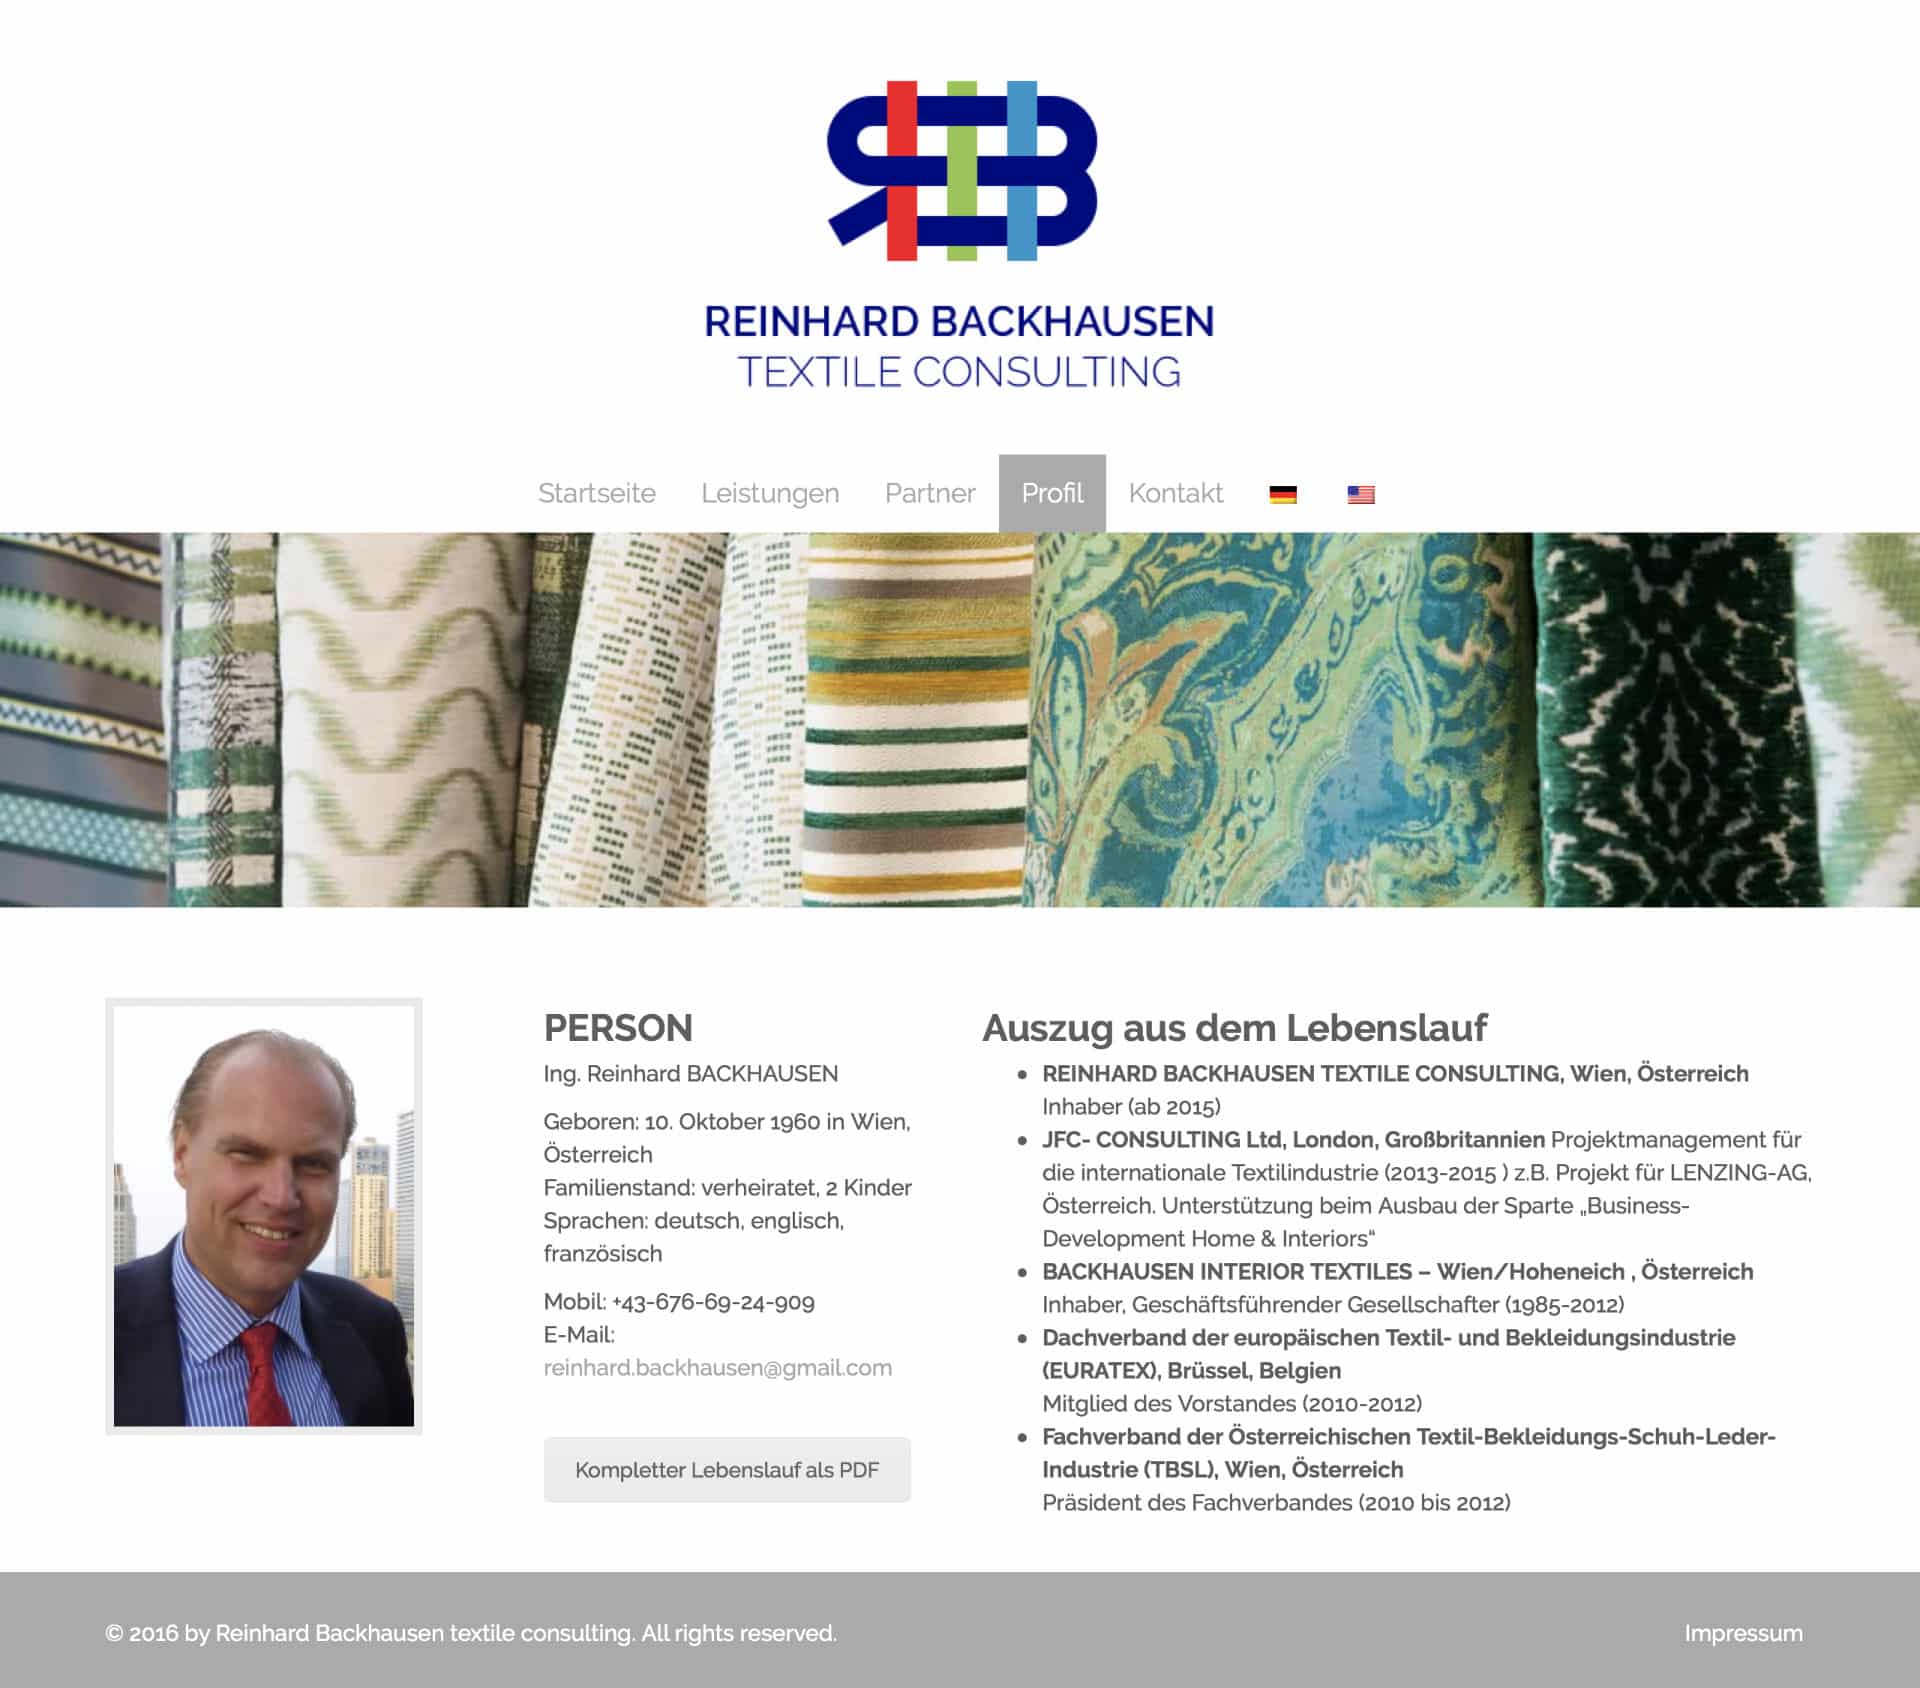 Reinhard Backhausen textile consulting Website